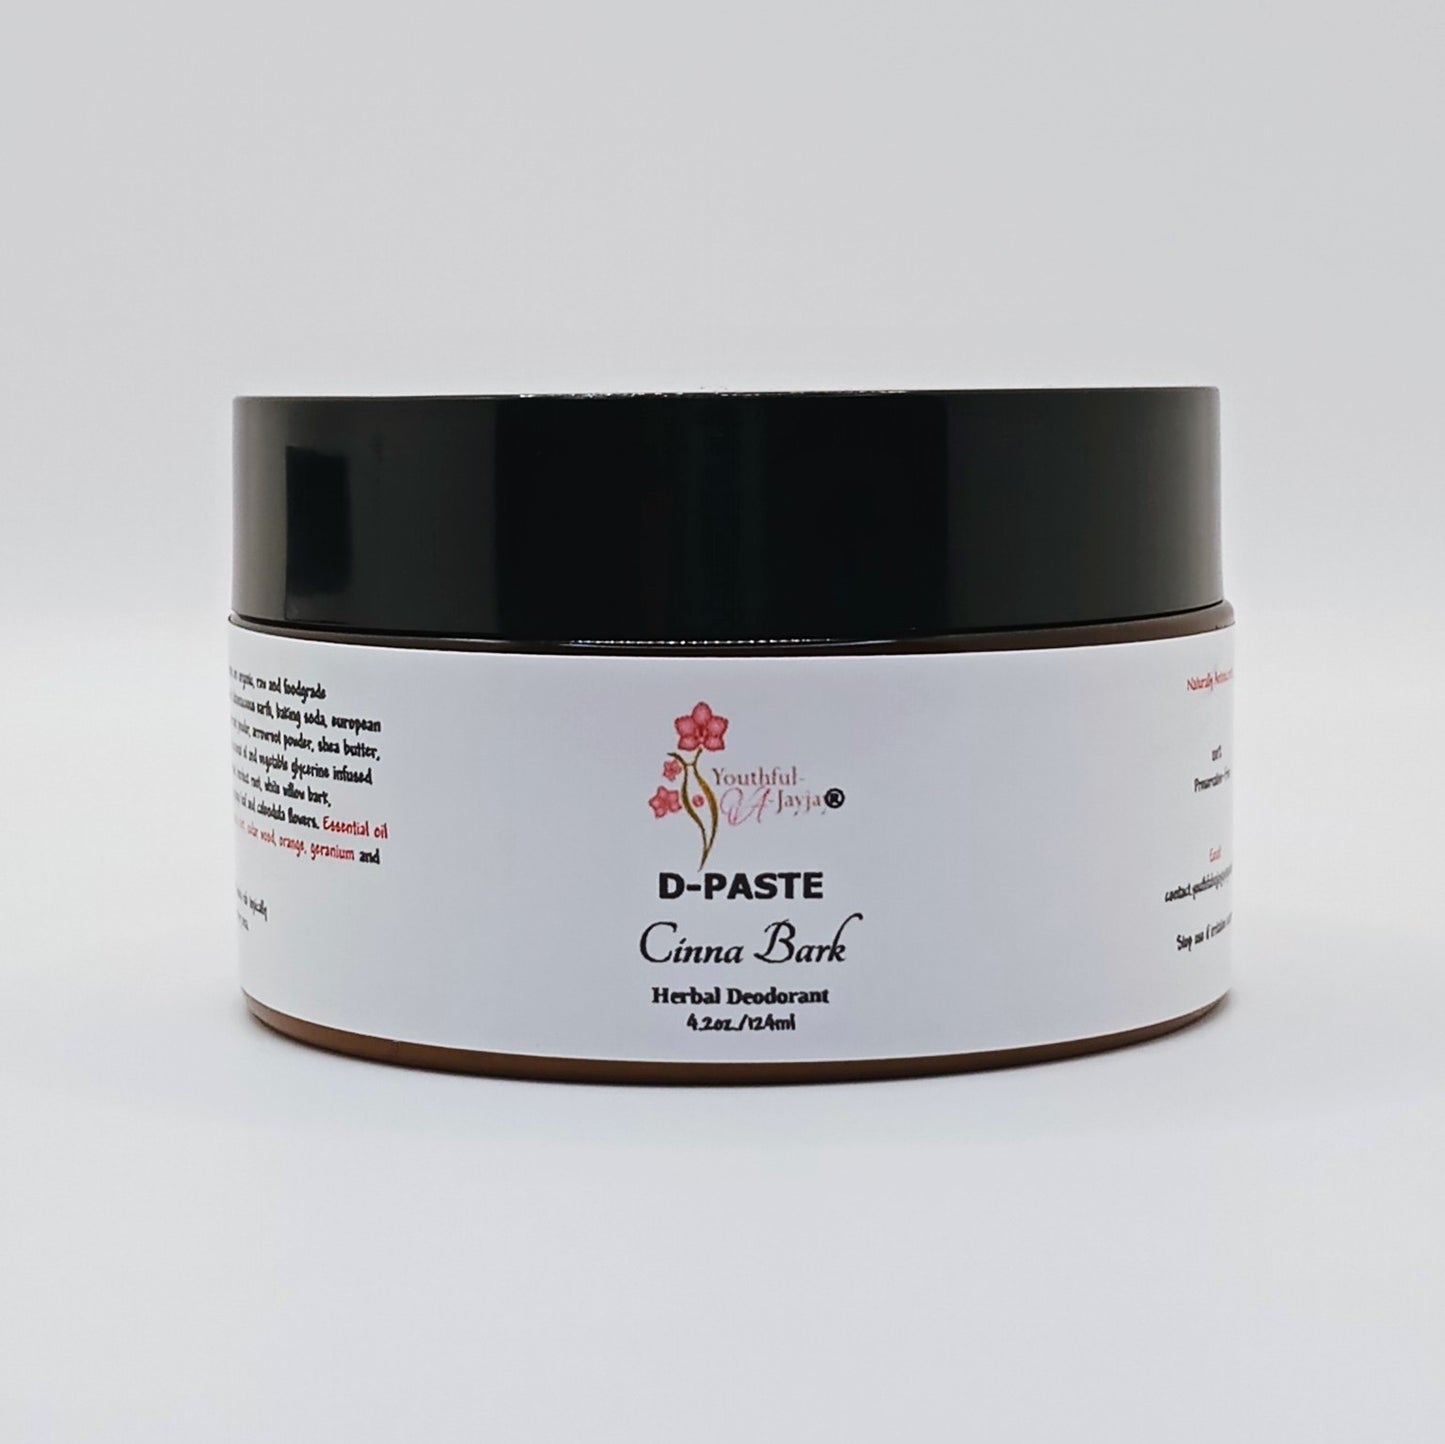 D-PASTE:  Cinna Bark - Natural Organic Herbal Deodorant Paste, FOR HIM 4 oz.